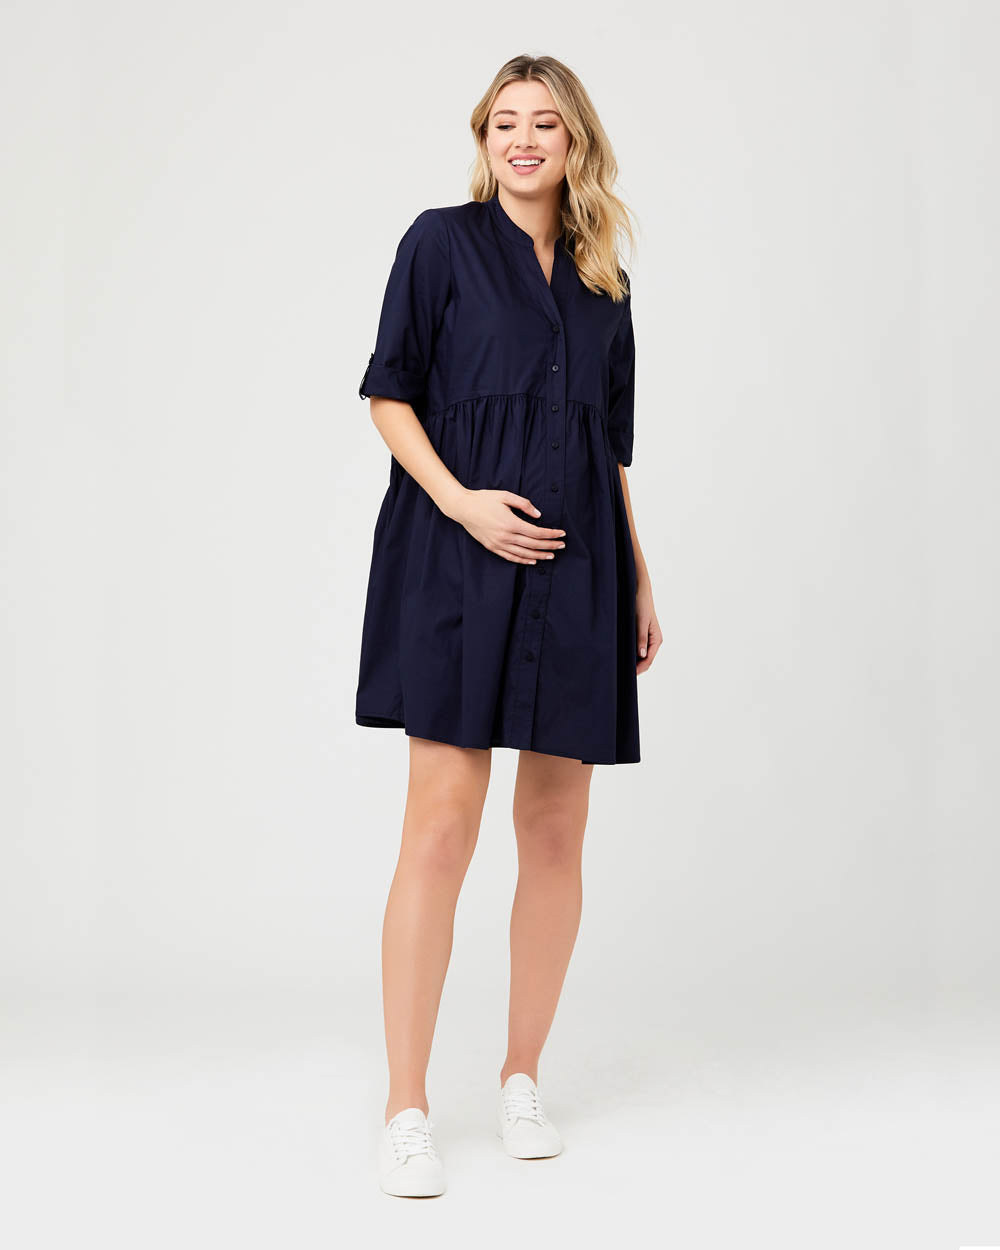 Ripe Maternity 'Paige' Nursing Dress - Navy